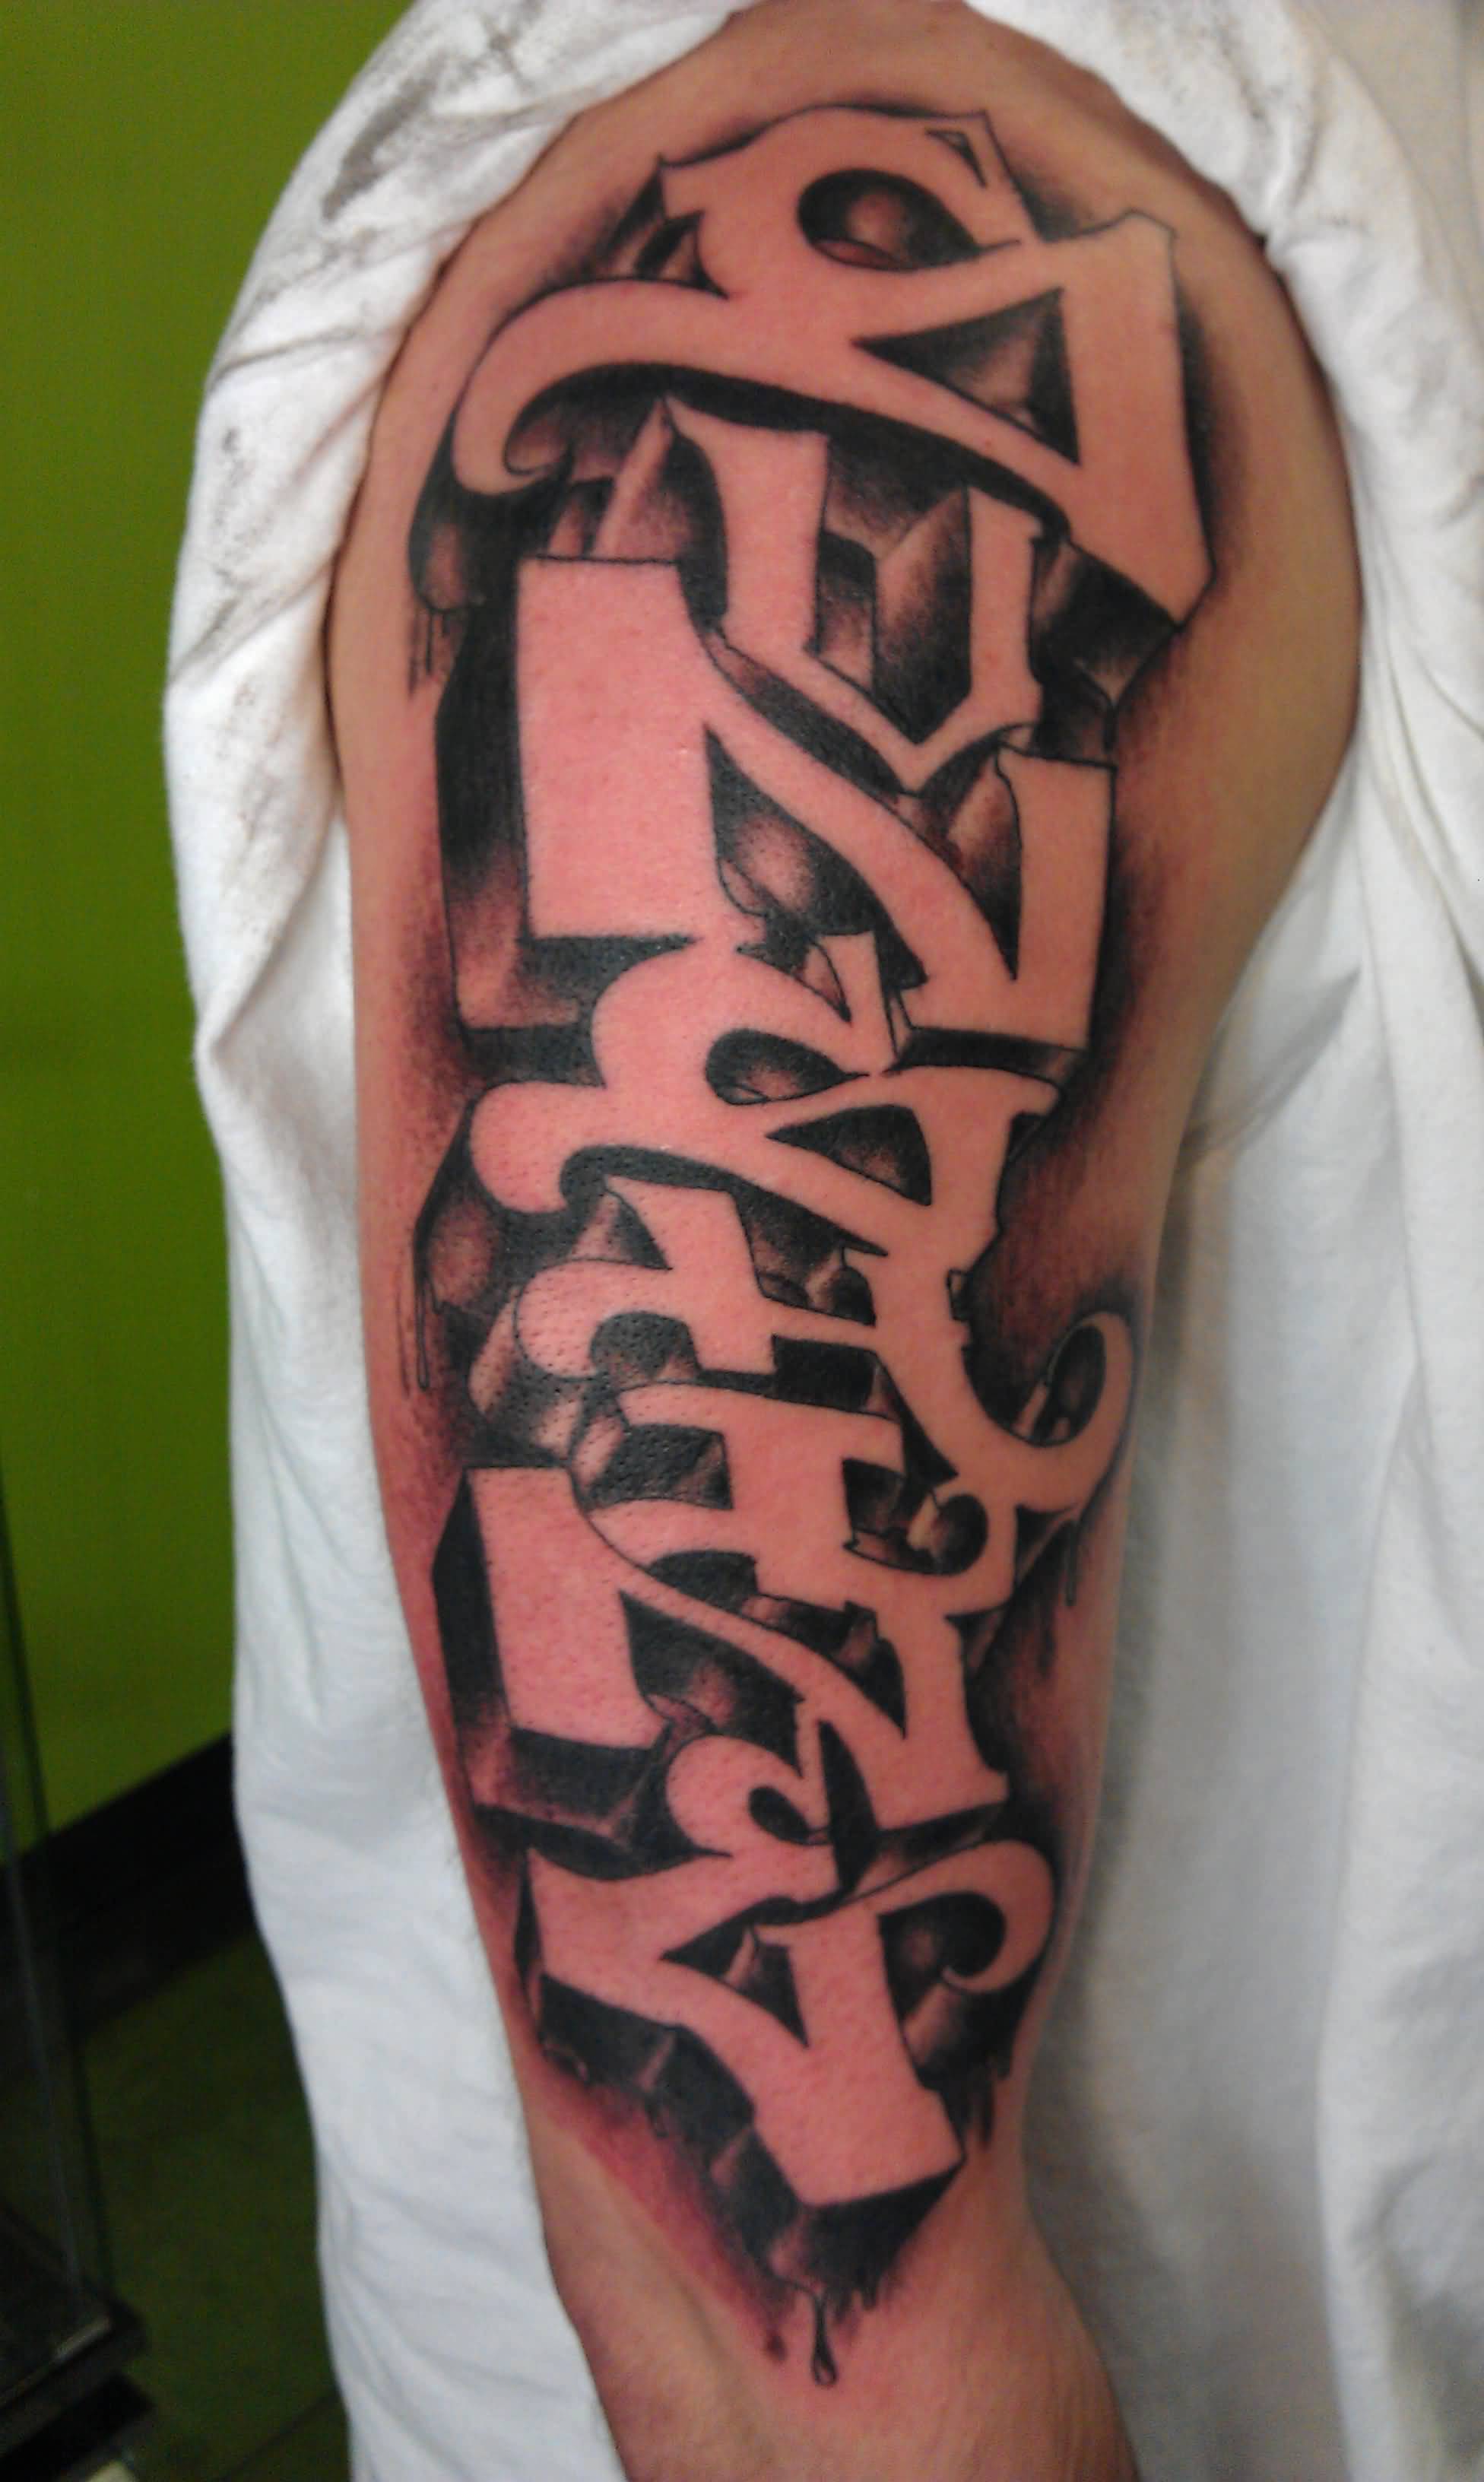 Right Sleeve Graffiti Tattoo For Men